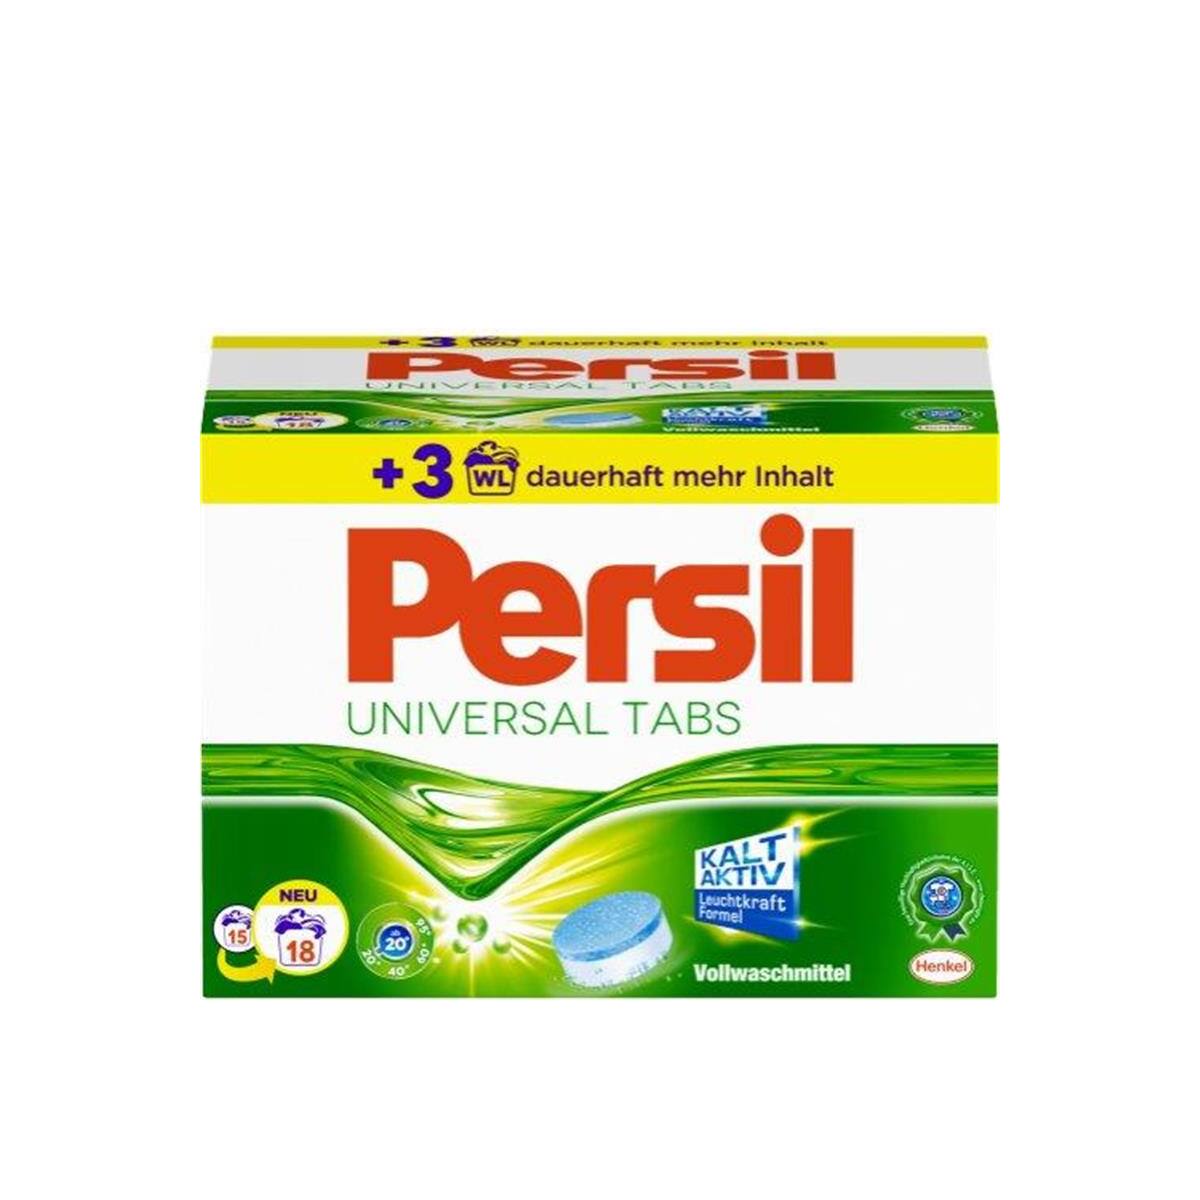 Persil Universal-Tabs 18 WL